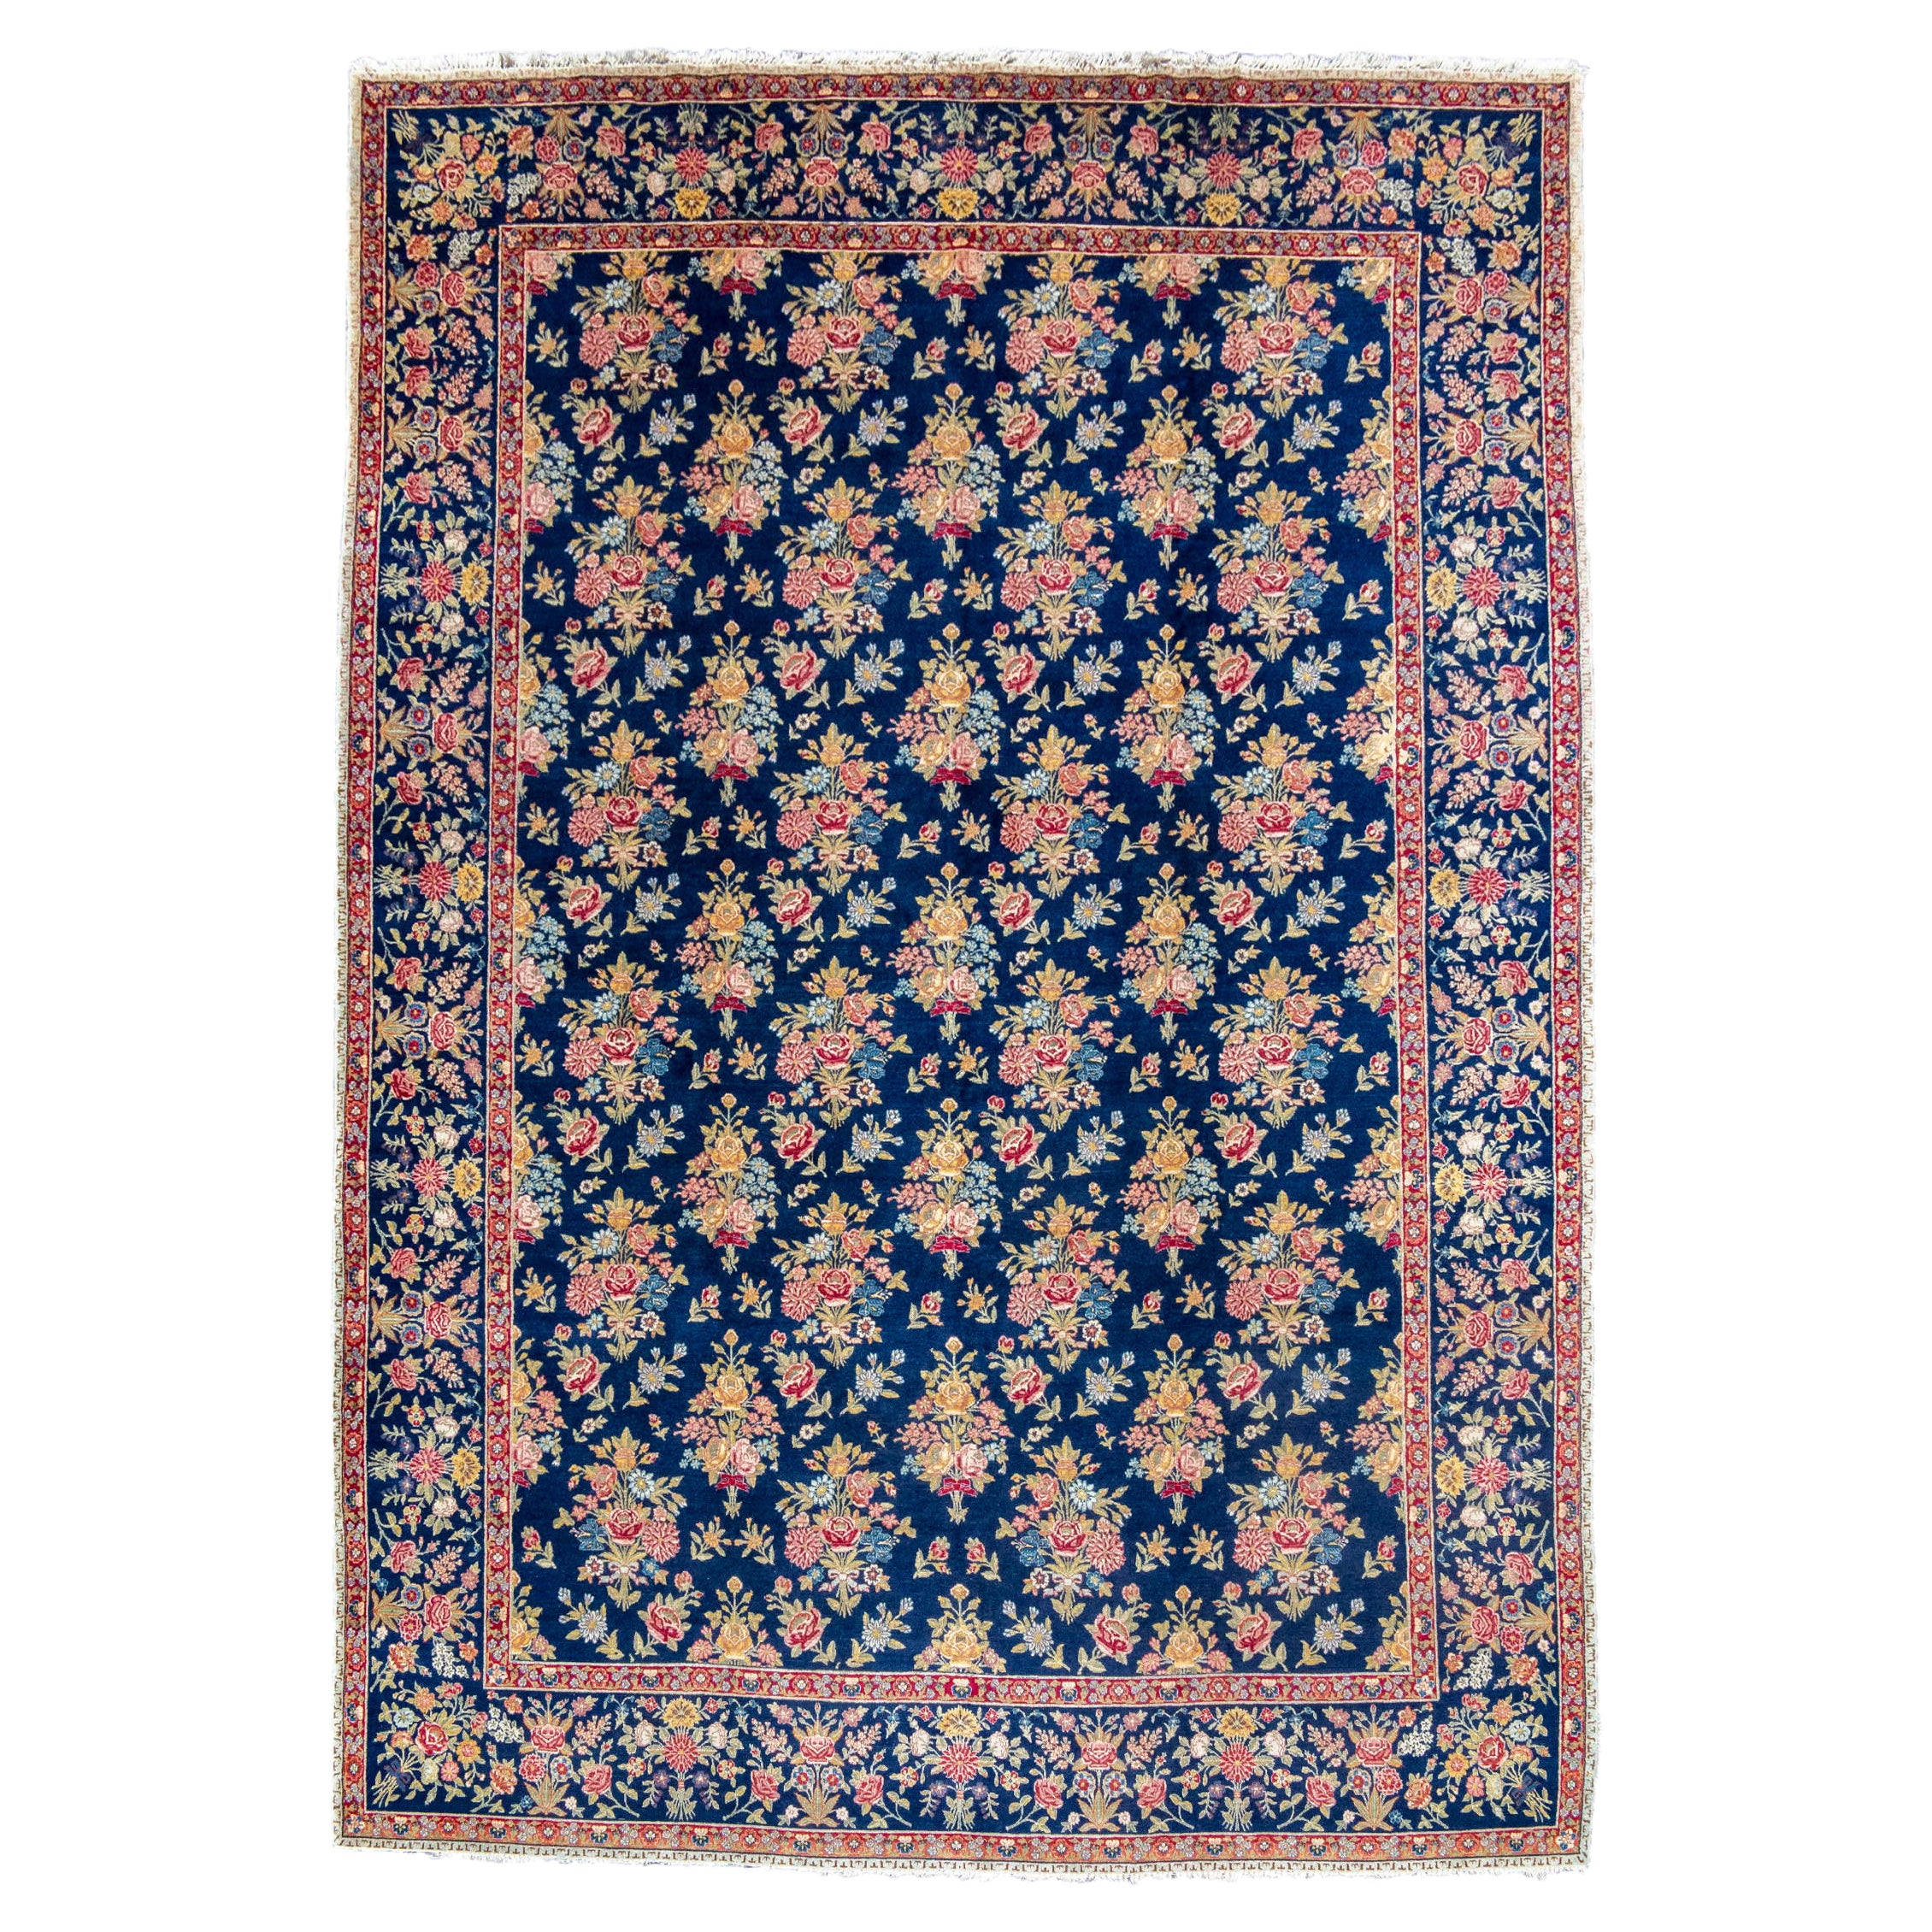 Antique Persian Floral Tabriz Carpet, c. 1900